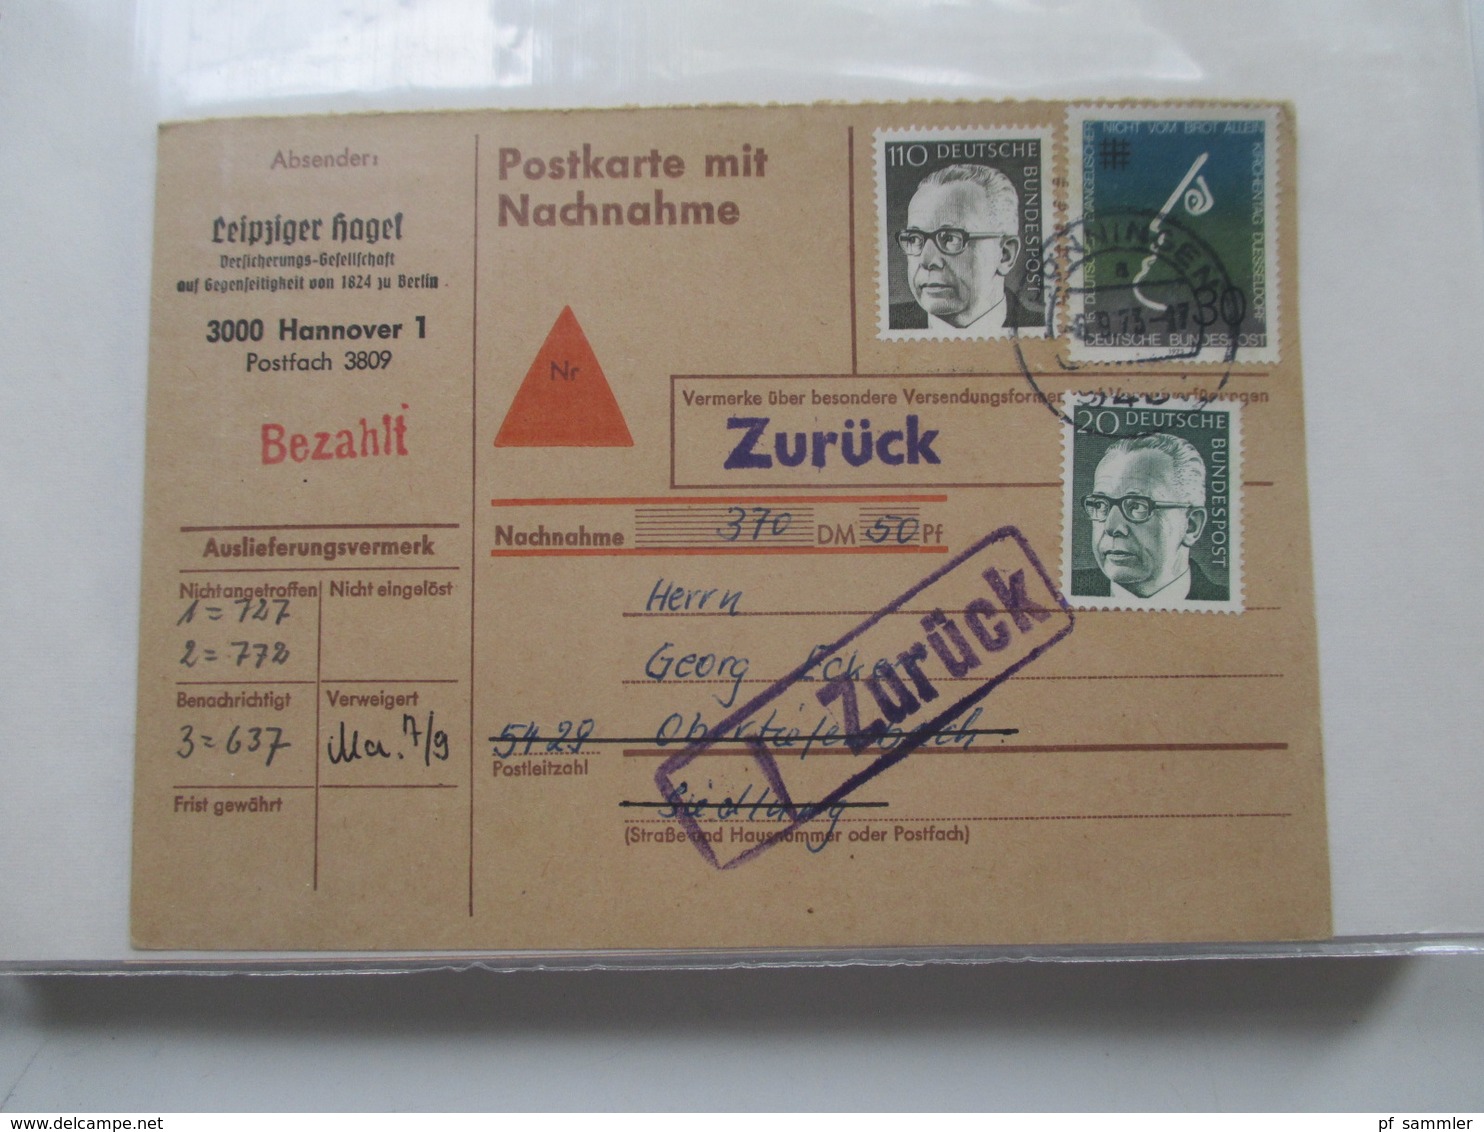 BRD / Berlin Belegeposten in 2 Alben 90 Belege / GA / Paketkarten. 22 Nachnahmekarten mit Zurück Vermerk! 1950 - 90er